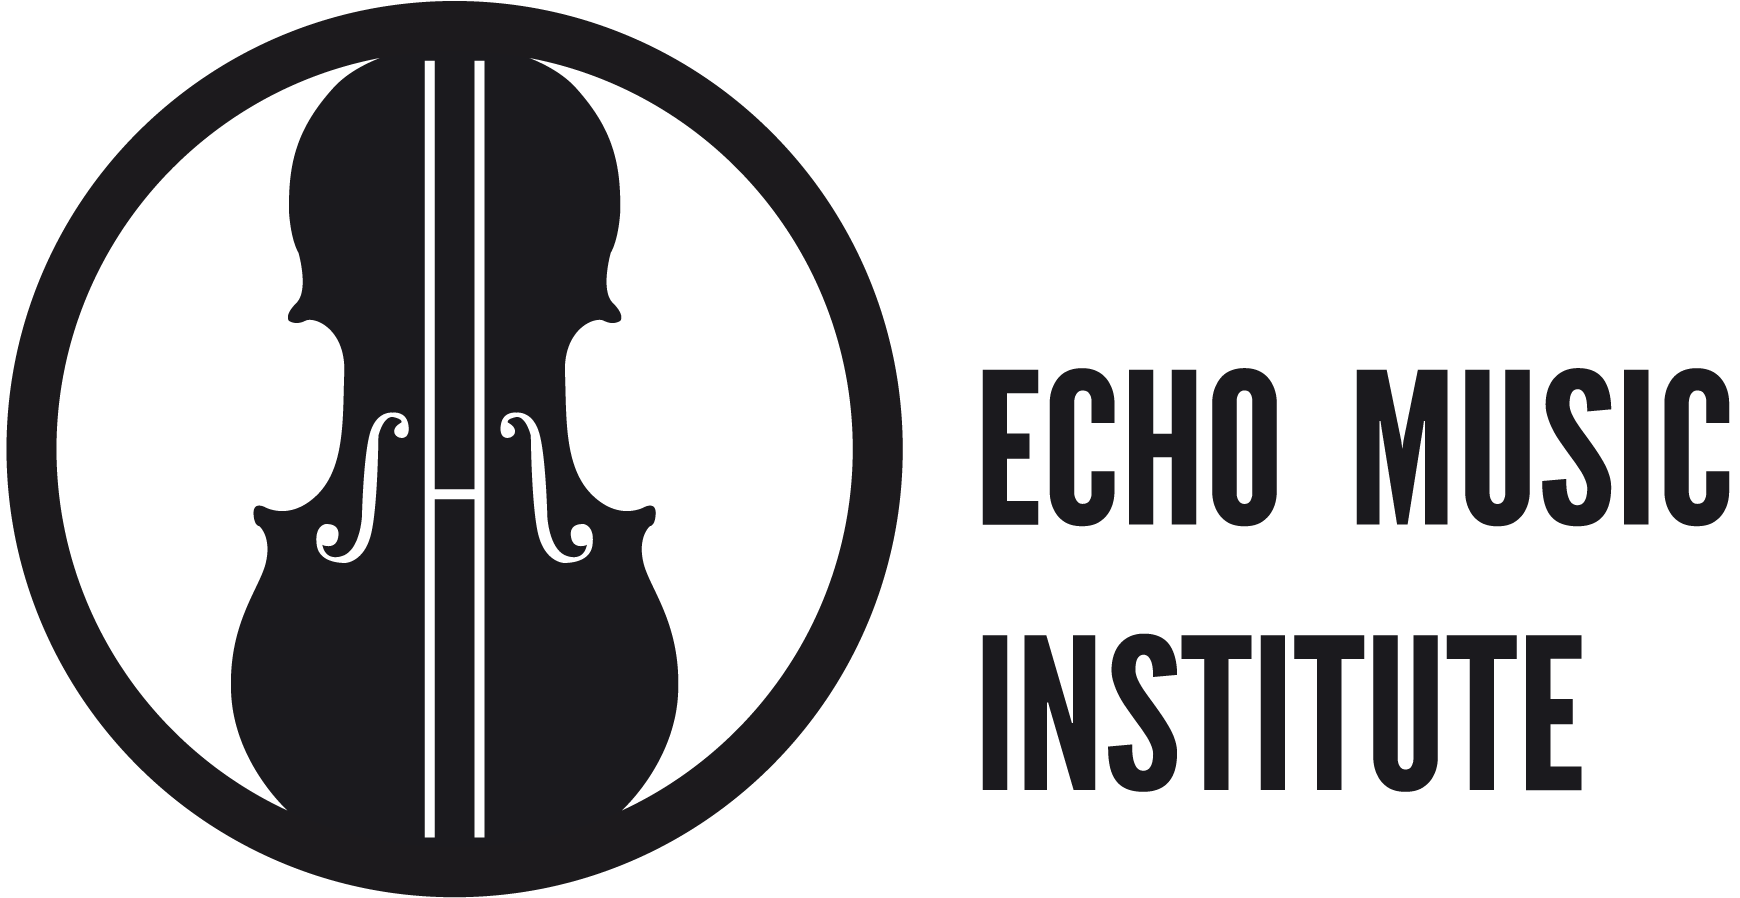 Echo Art Education